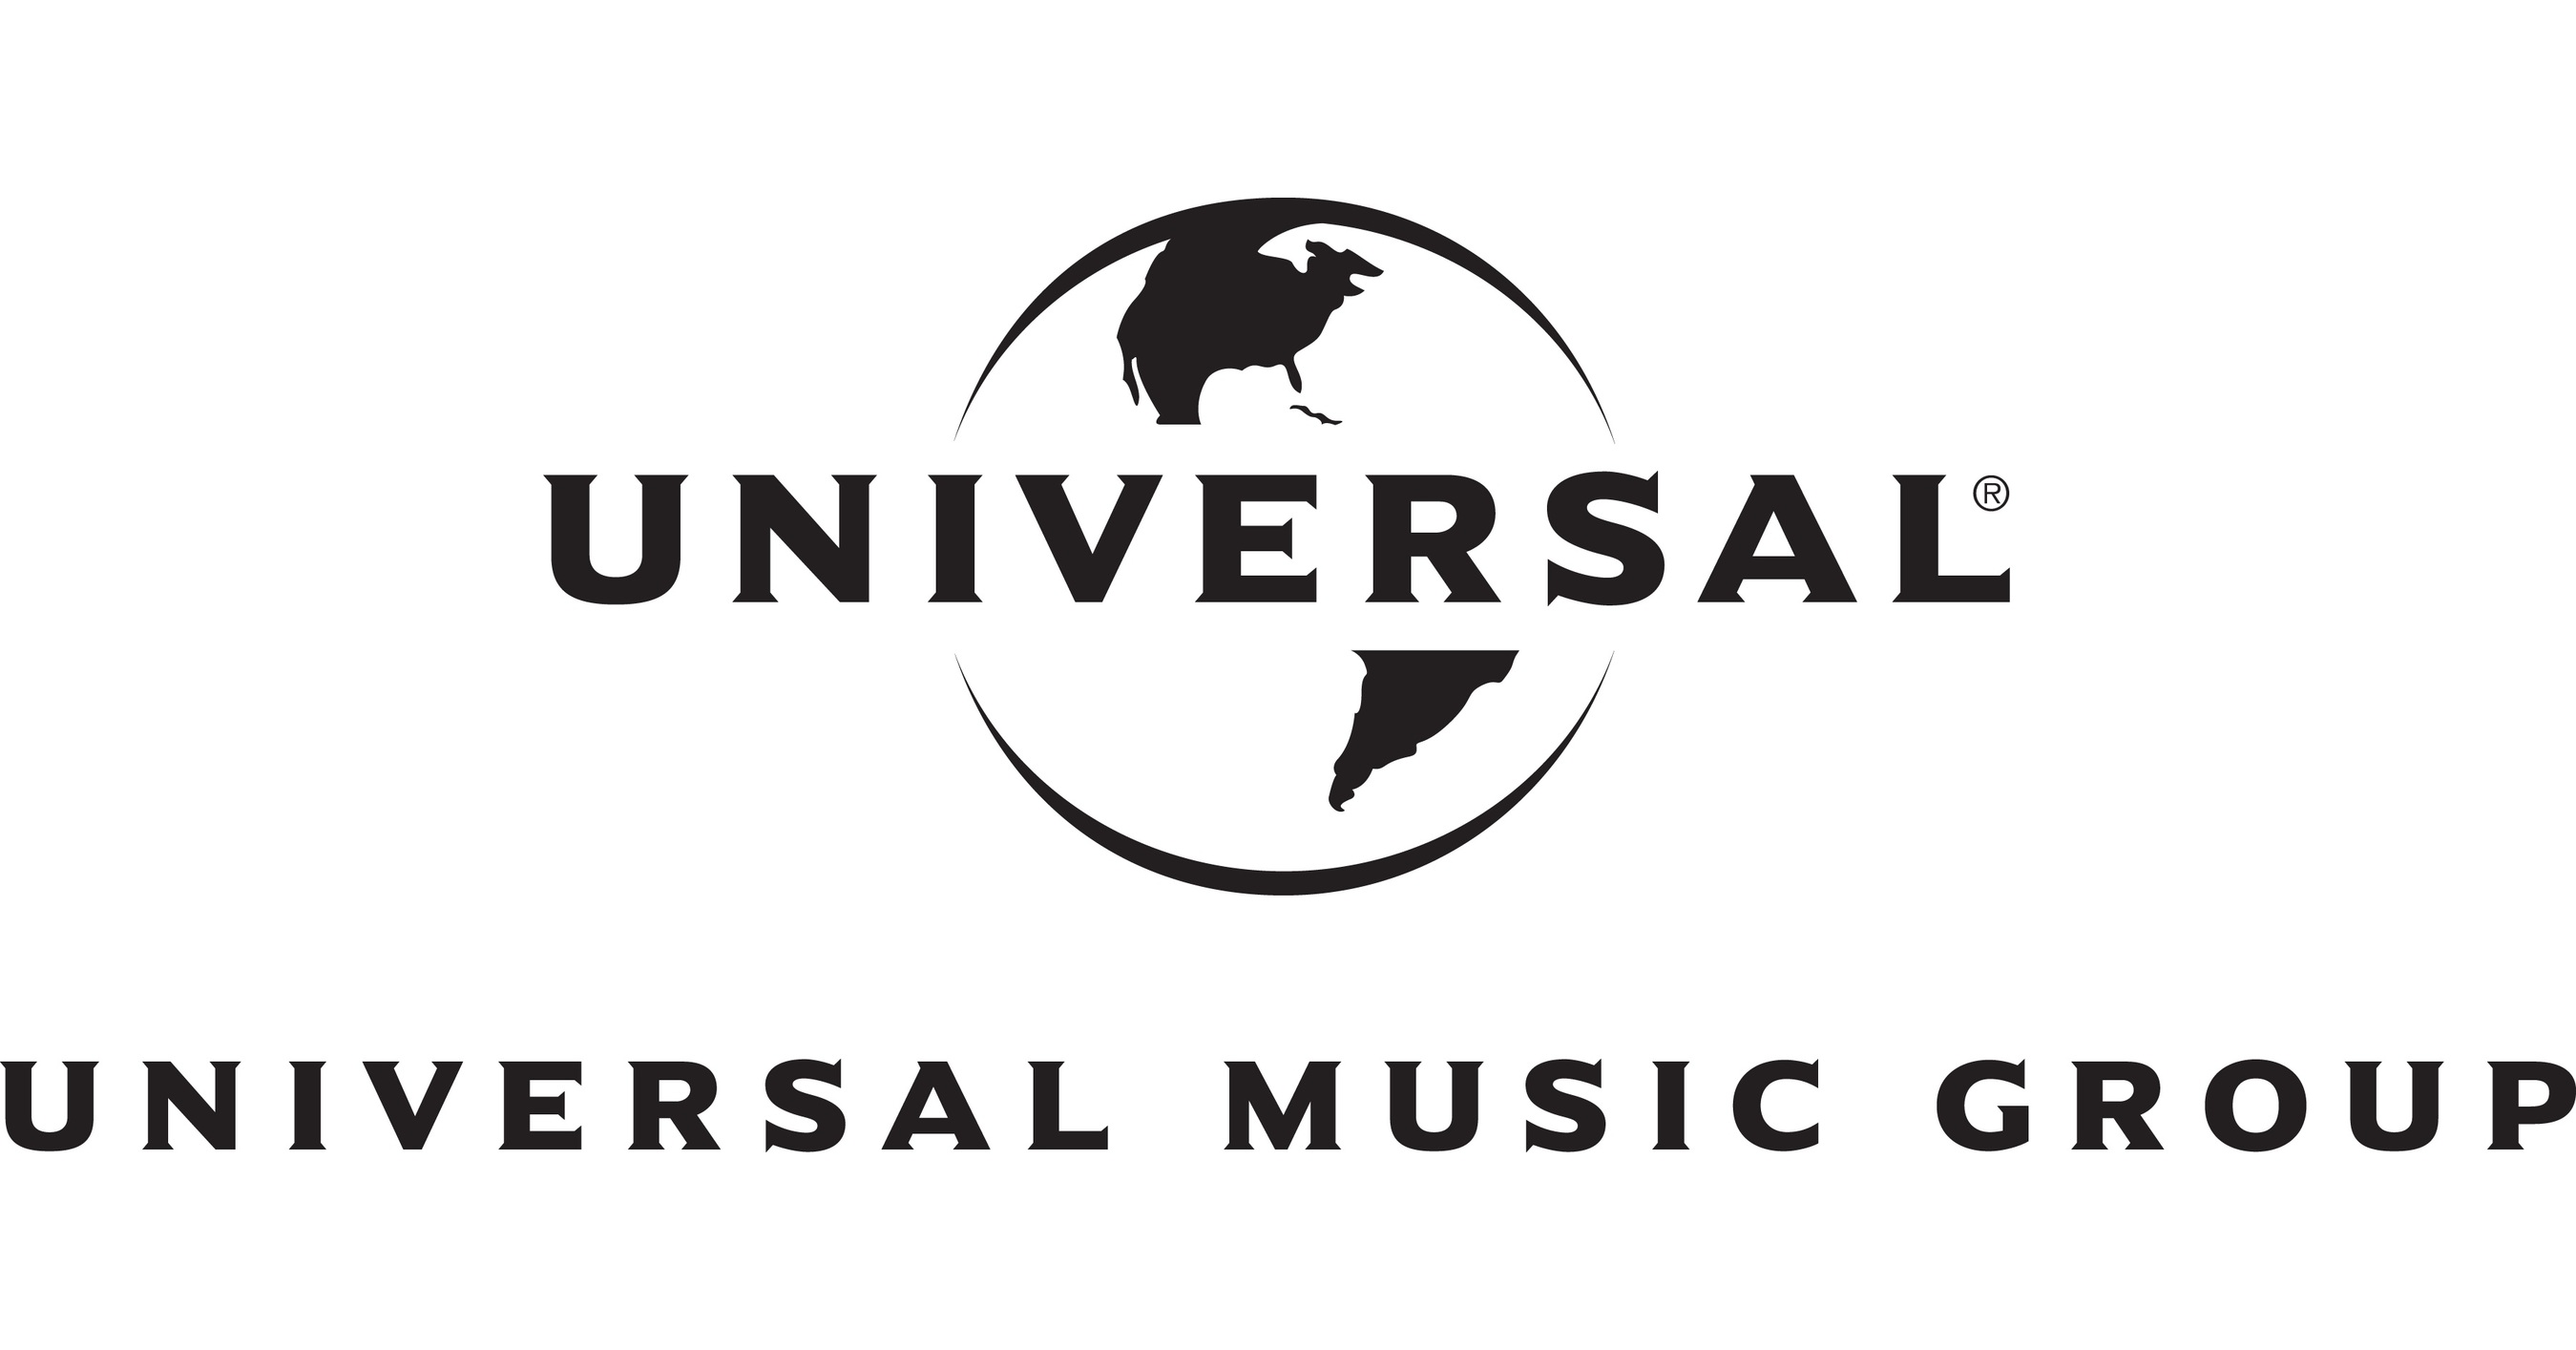 Universal Music Group NV neemt deel aan de Morgan Stanley European Technology, Media and Communications Conference 2022